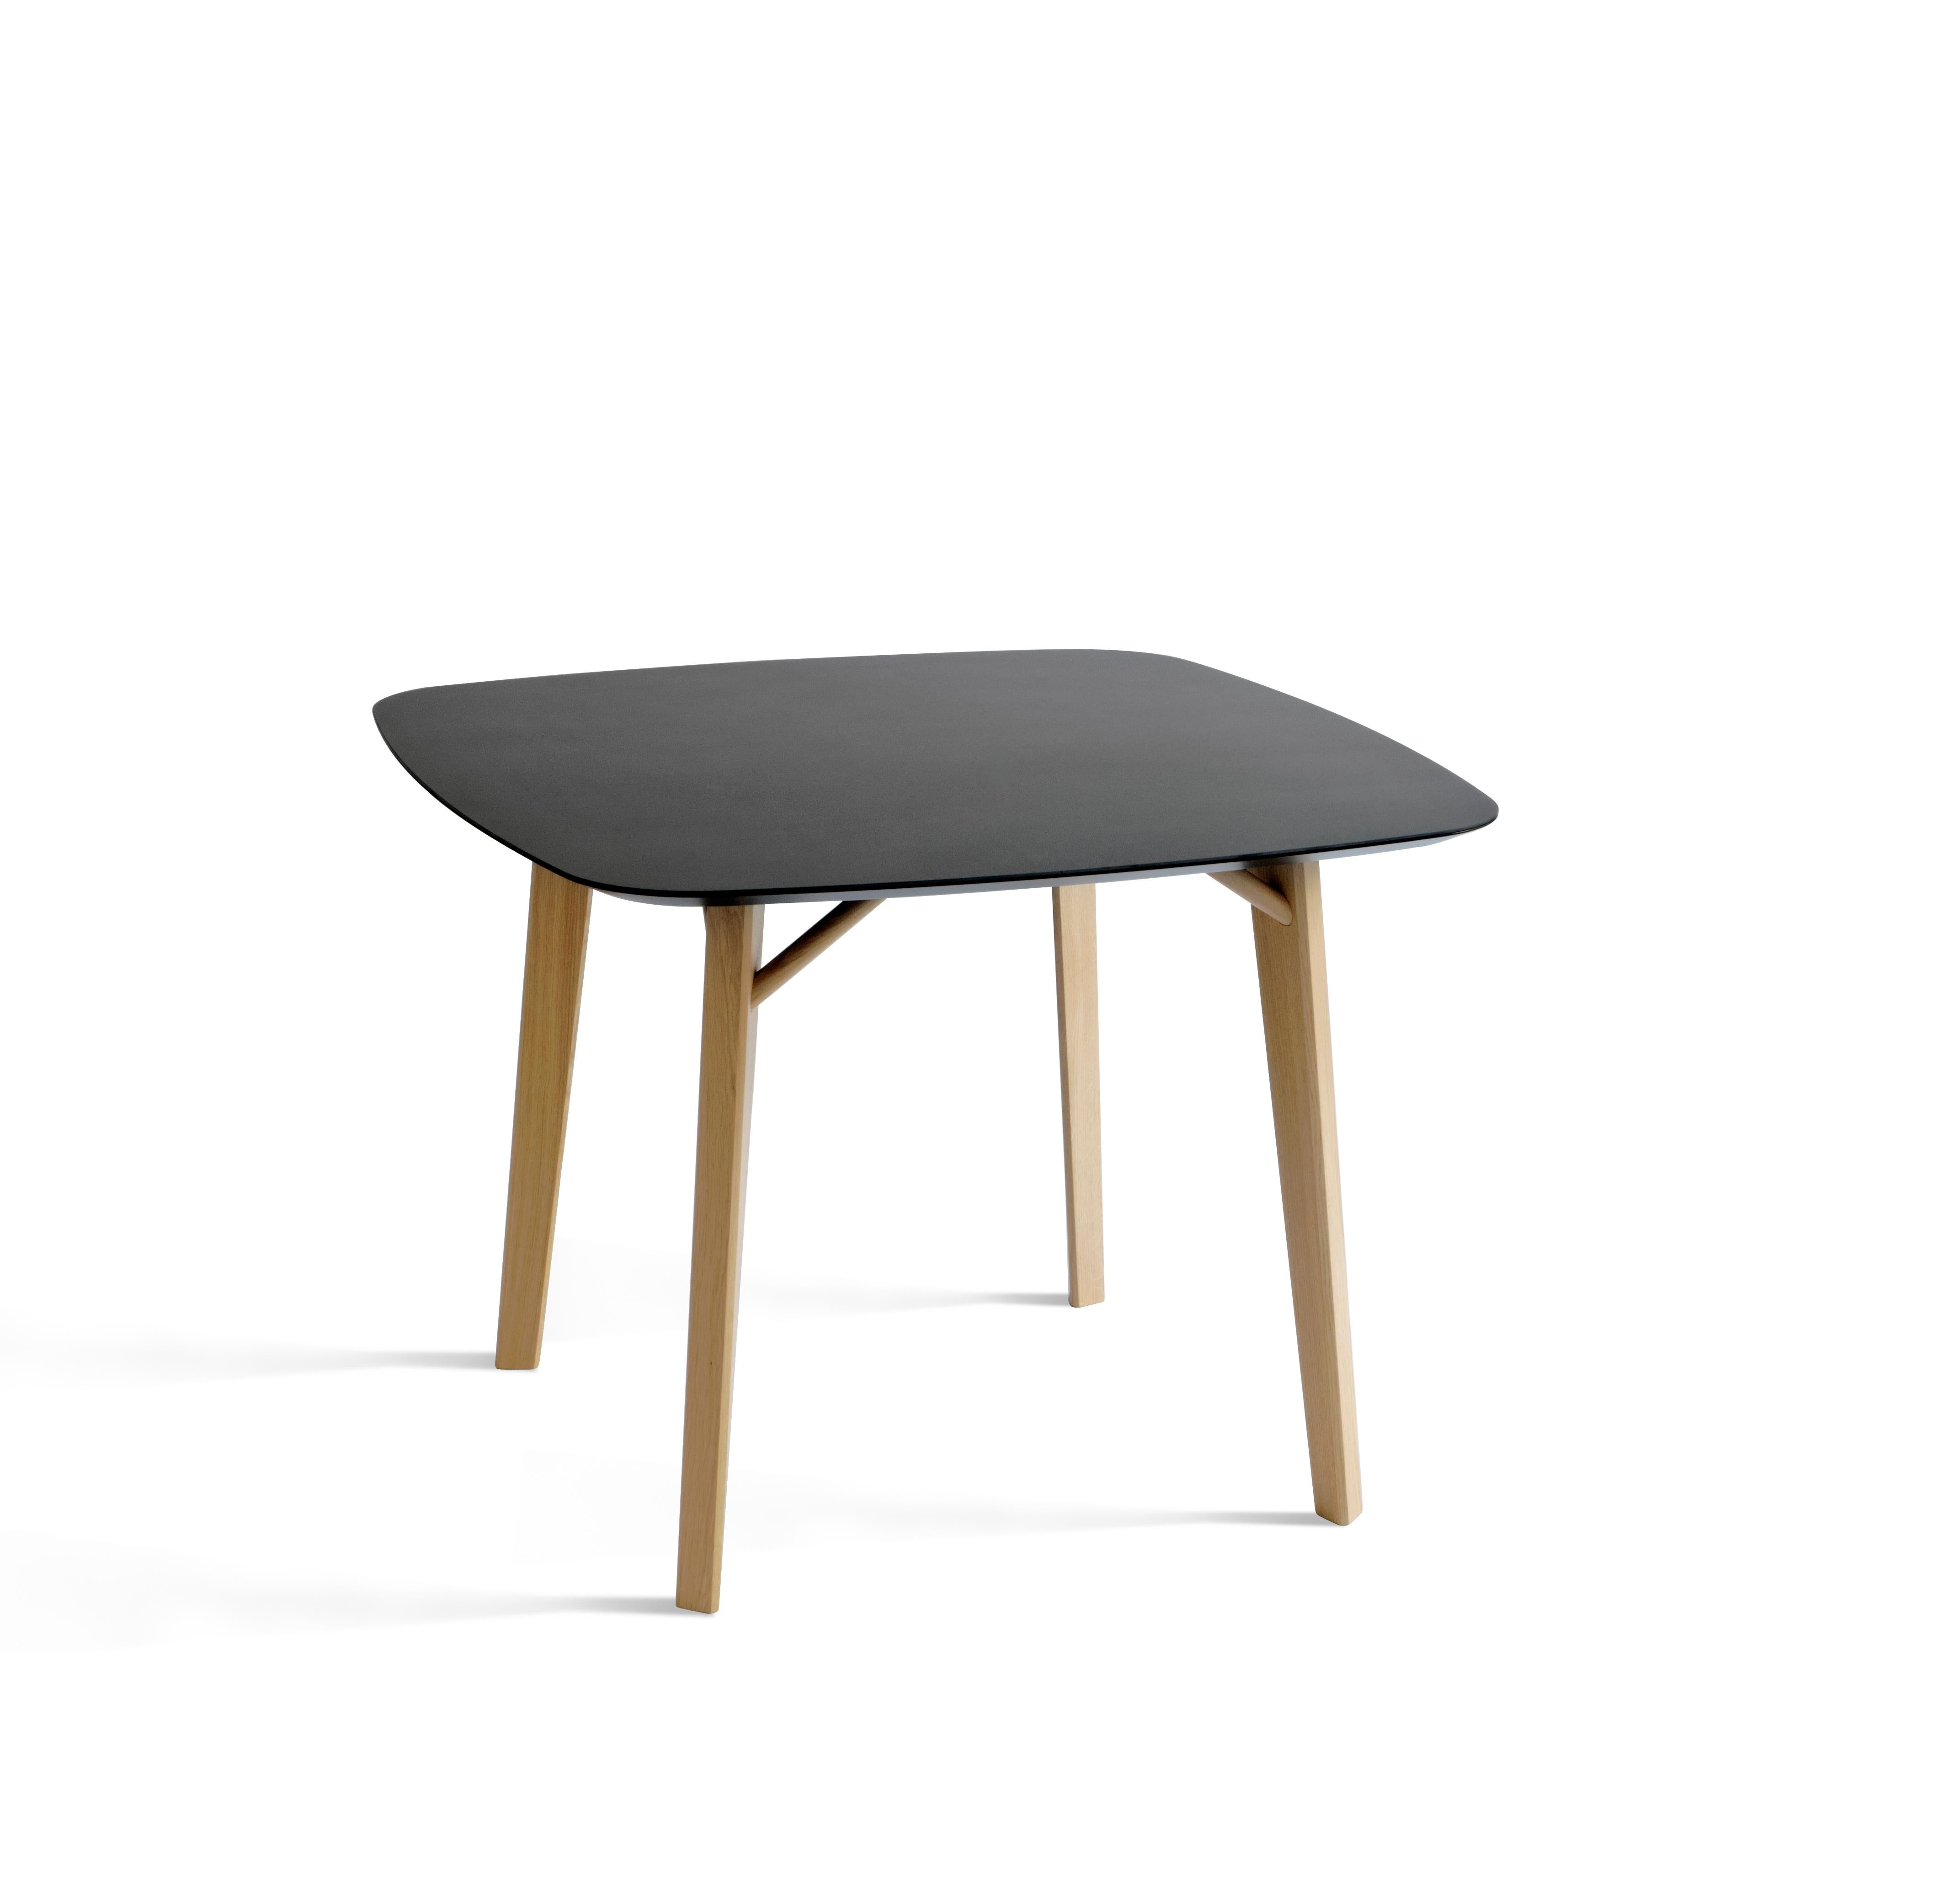 Italian Tria Octa Table by Colé, Asymmetric Top, Solid Oak Legs, Modern Design Icon For Sale